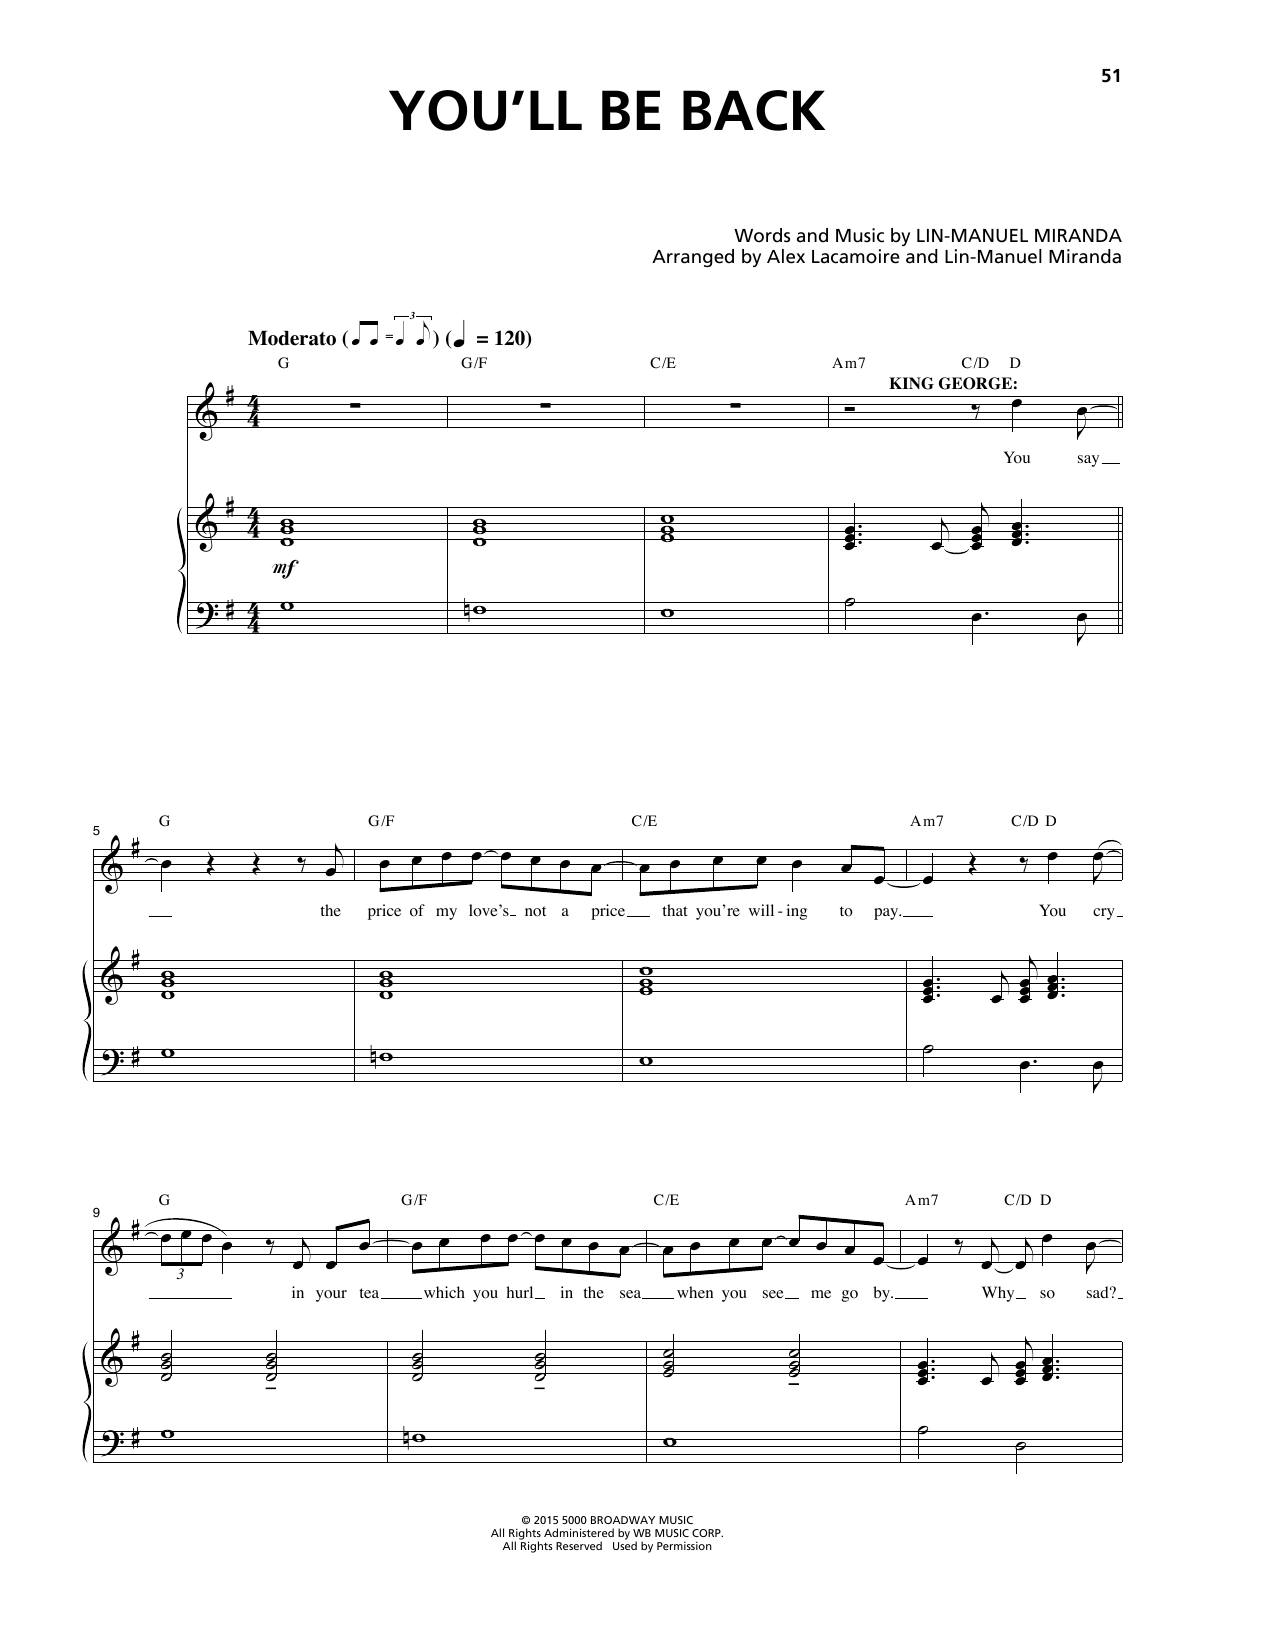 Lin-Manuel Miranda You'll Be Back (from Hamilton) Sheet Music Notes & Chords for Piano, Vocal & Guitar (Right-Hand Melody) - Download or Print PDF